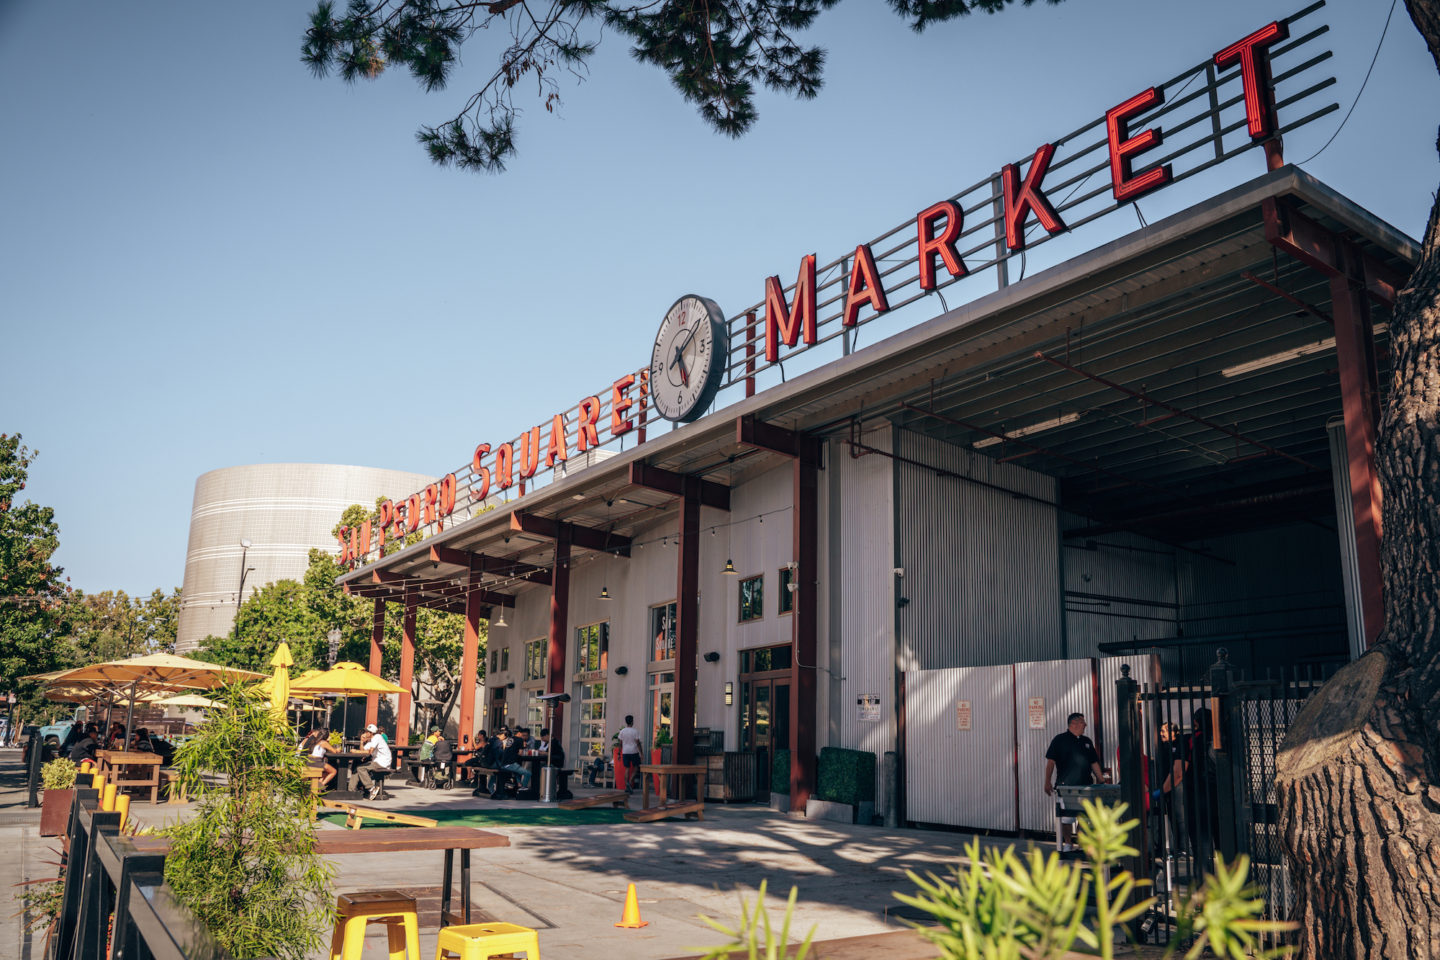 San Pedro Square Market - San Jose, California